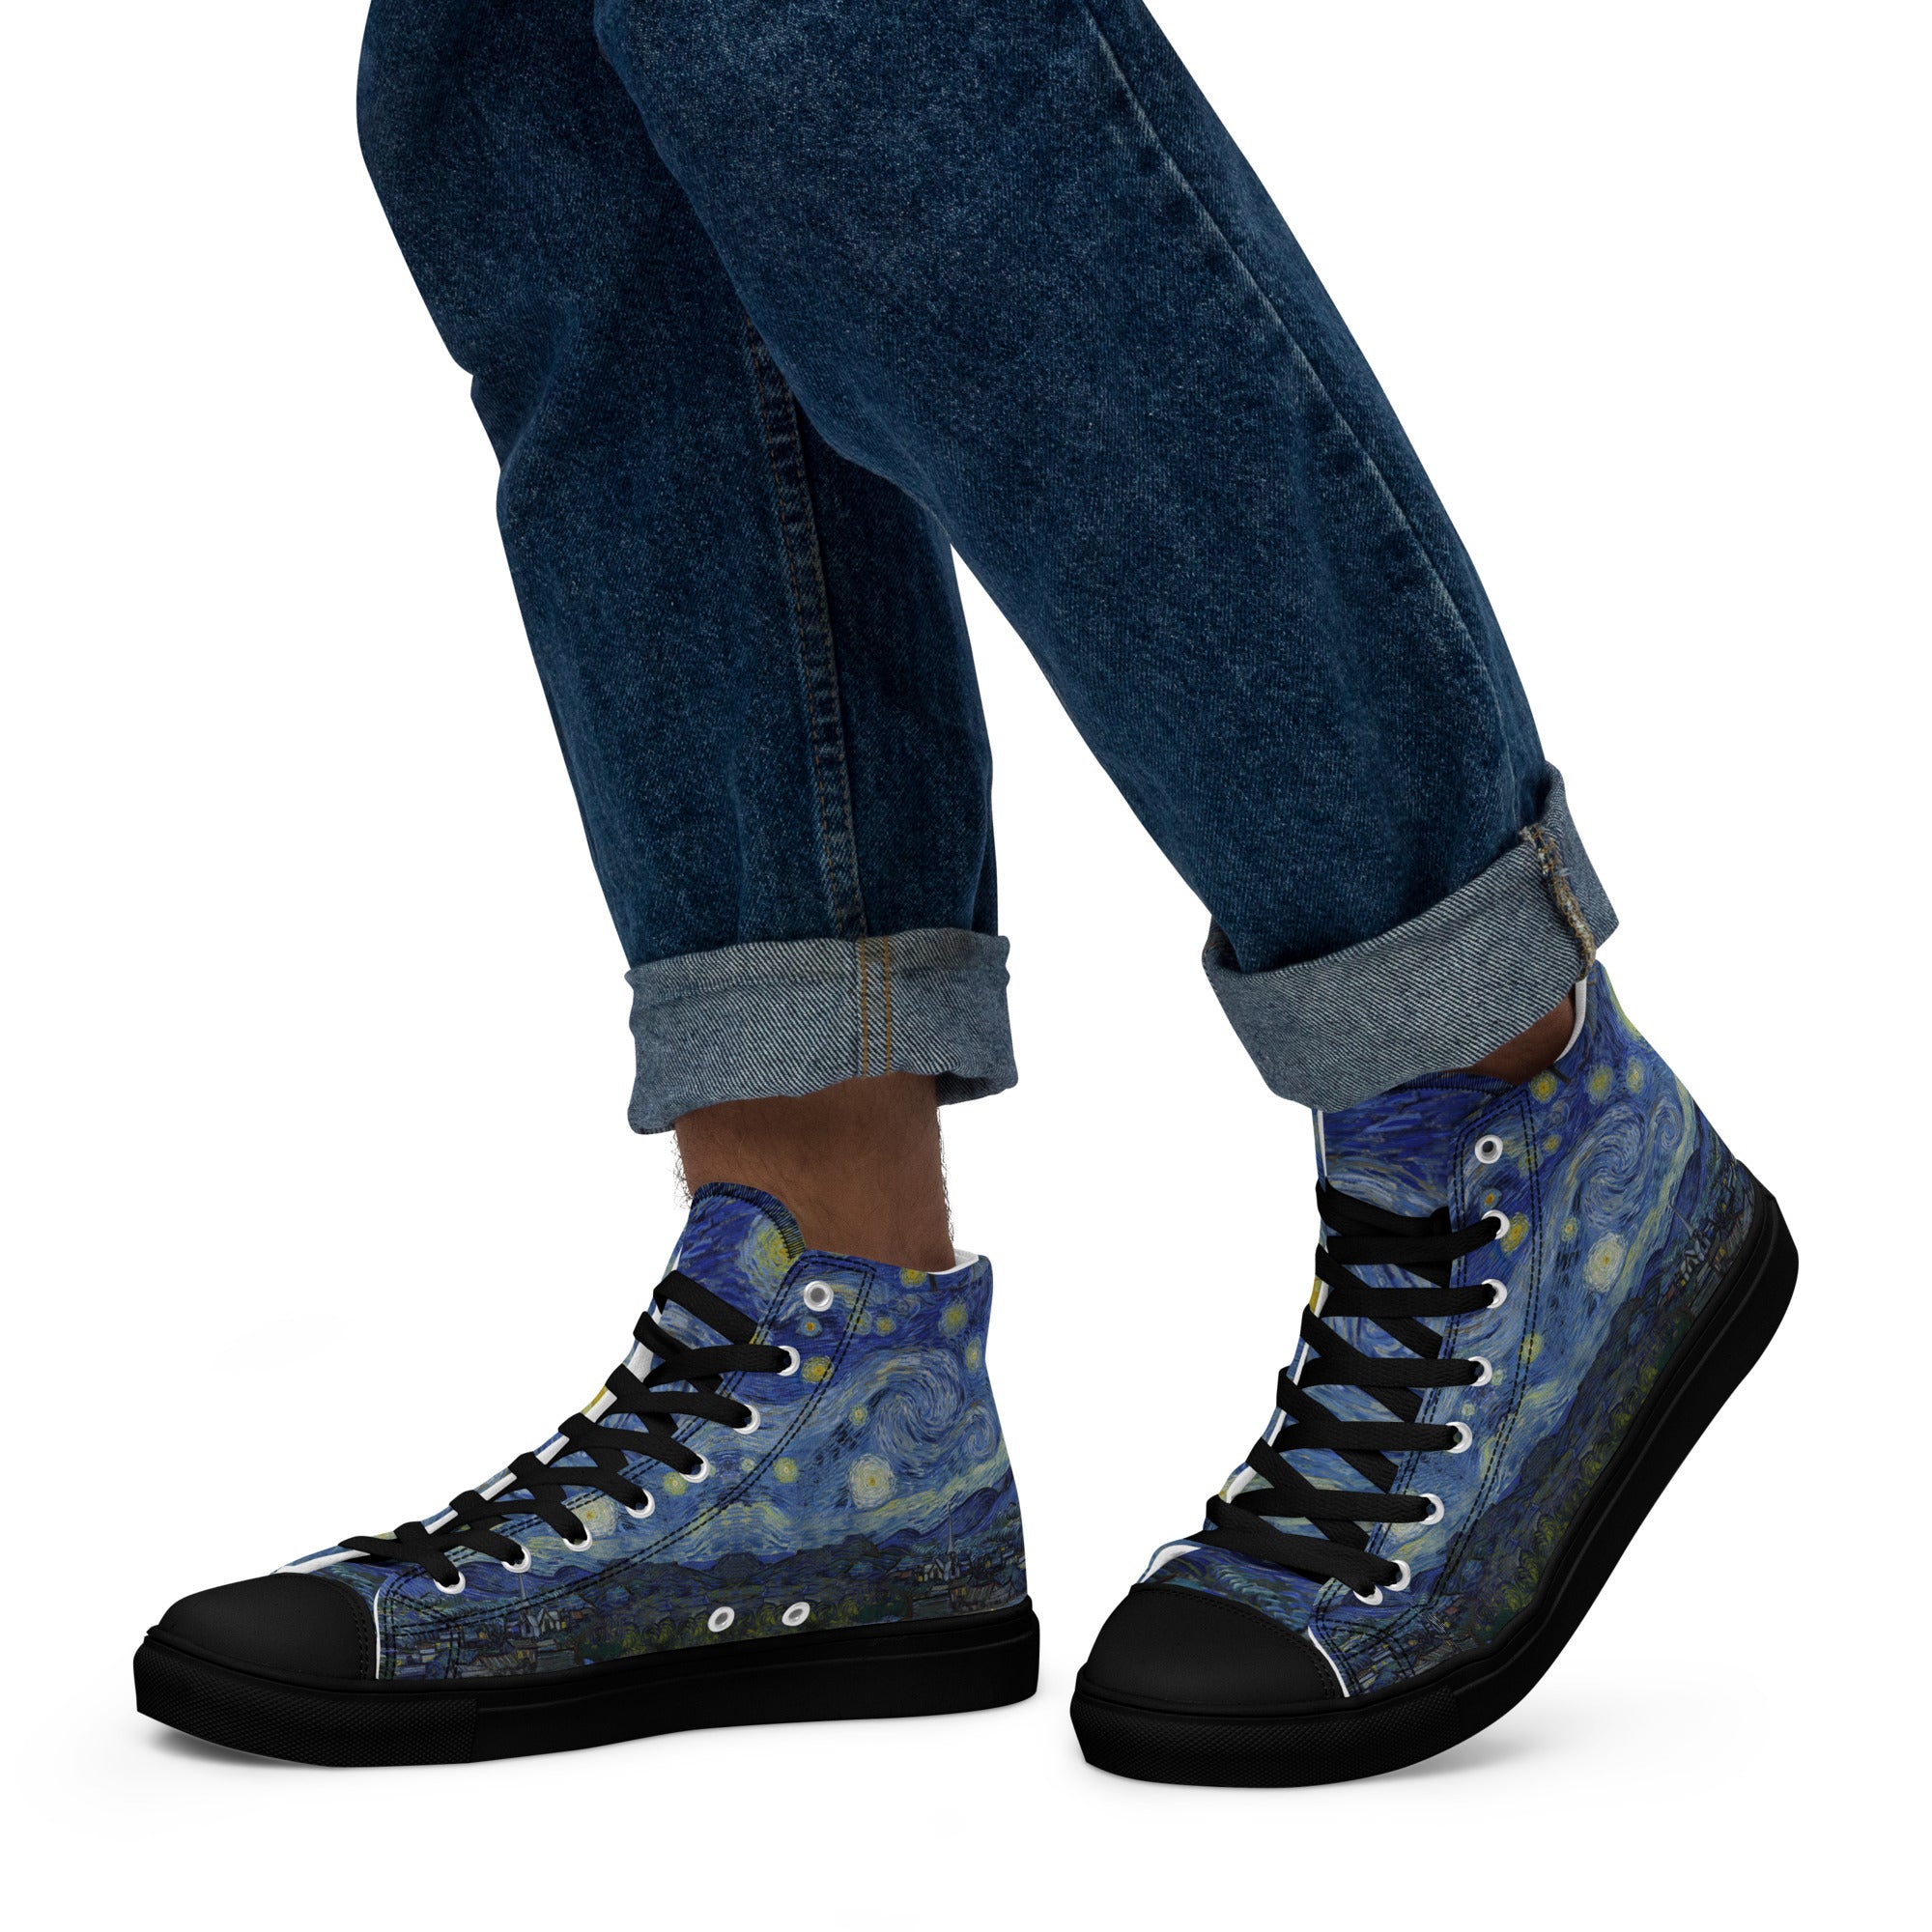 Vincent van Gogh 'Starry Night' High Top Shoes | Premium Art High Top Sneakers for Men